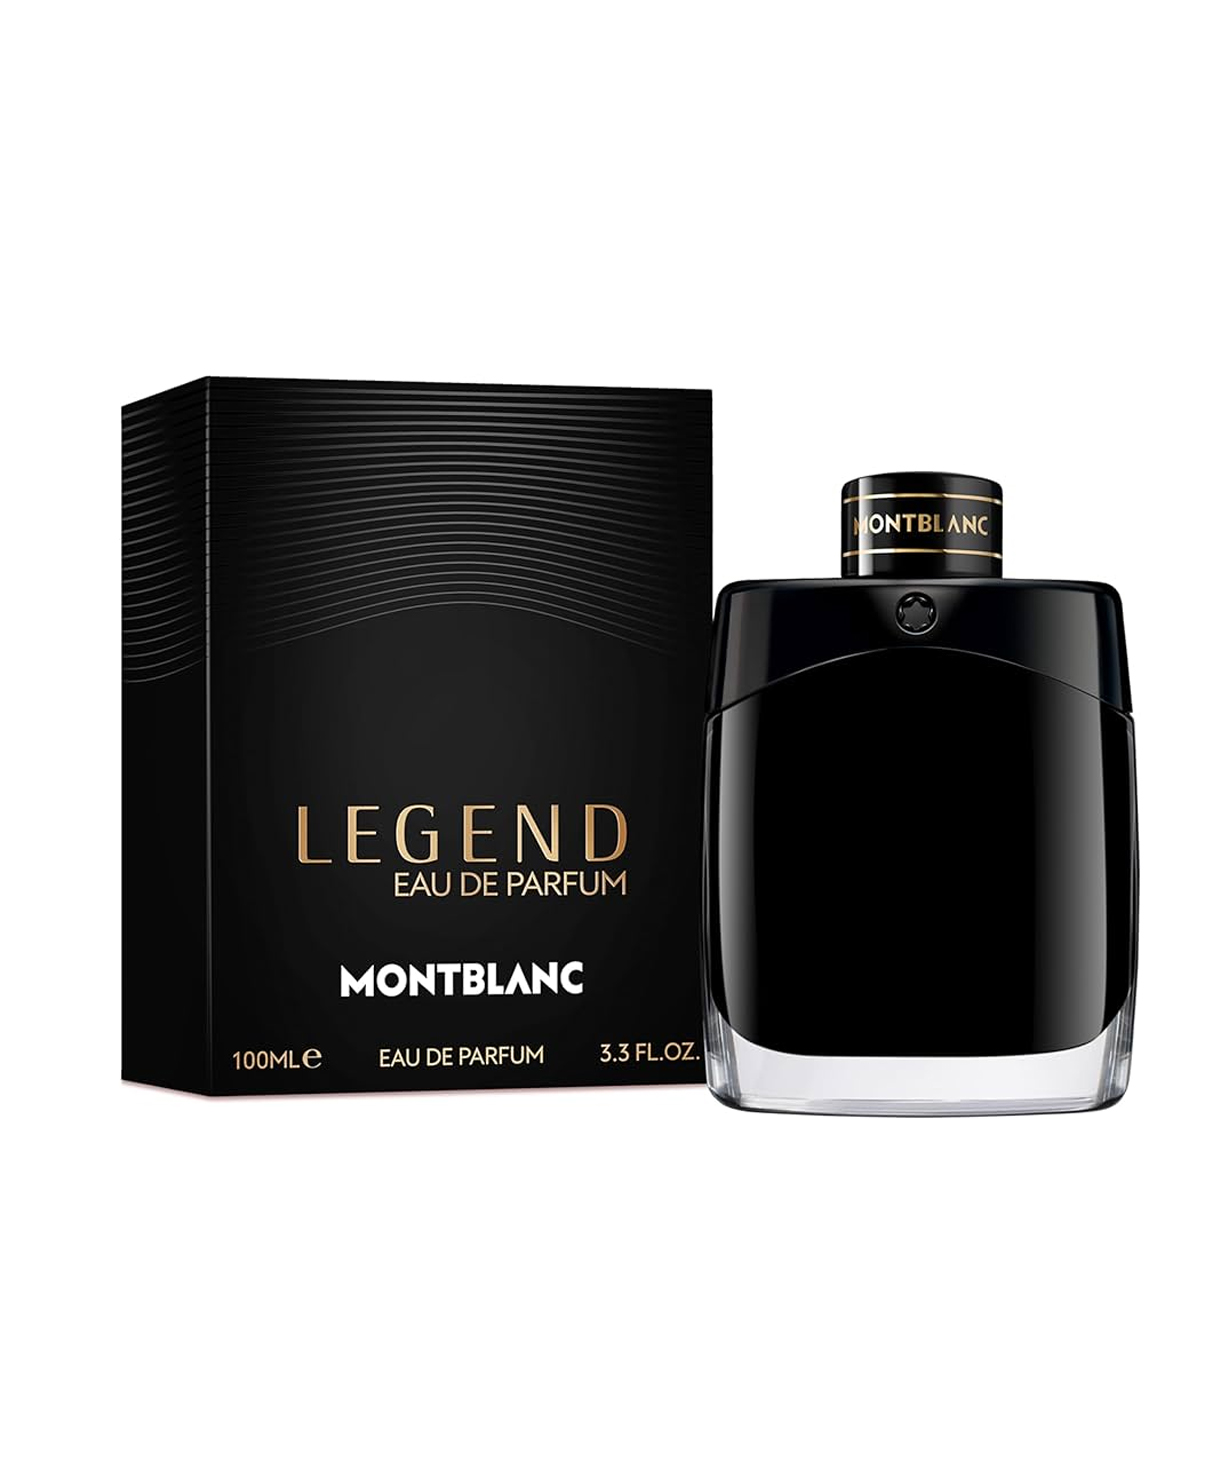 Perfume «Montblanc» Legend EDP, for men, 100 ml